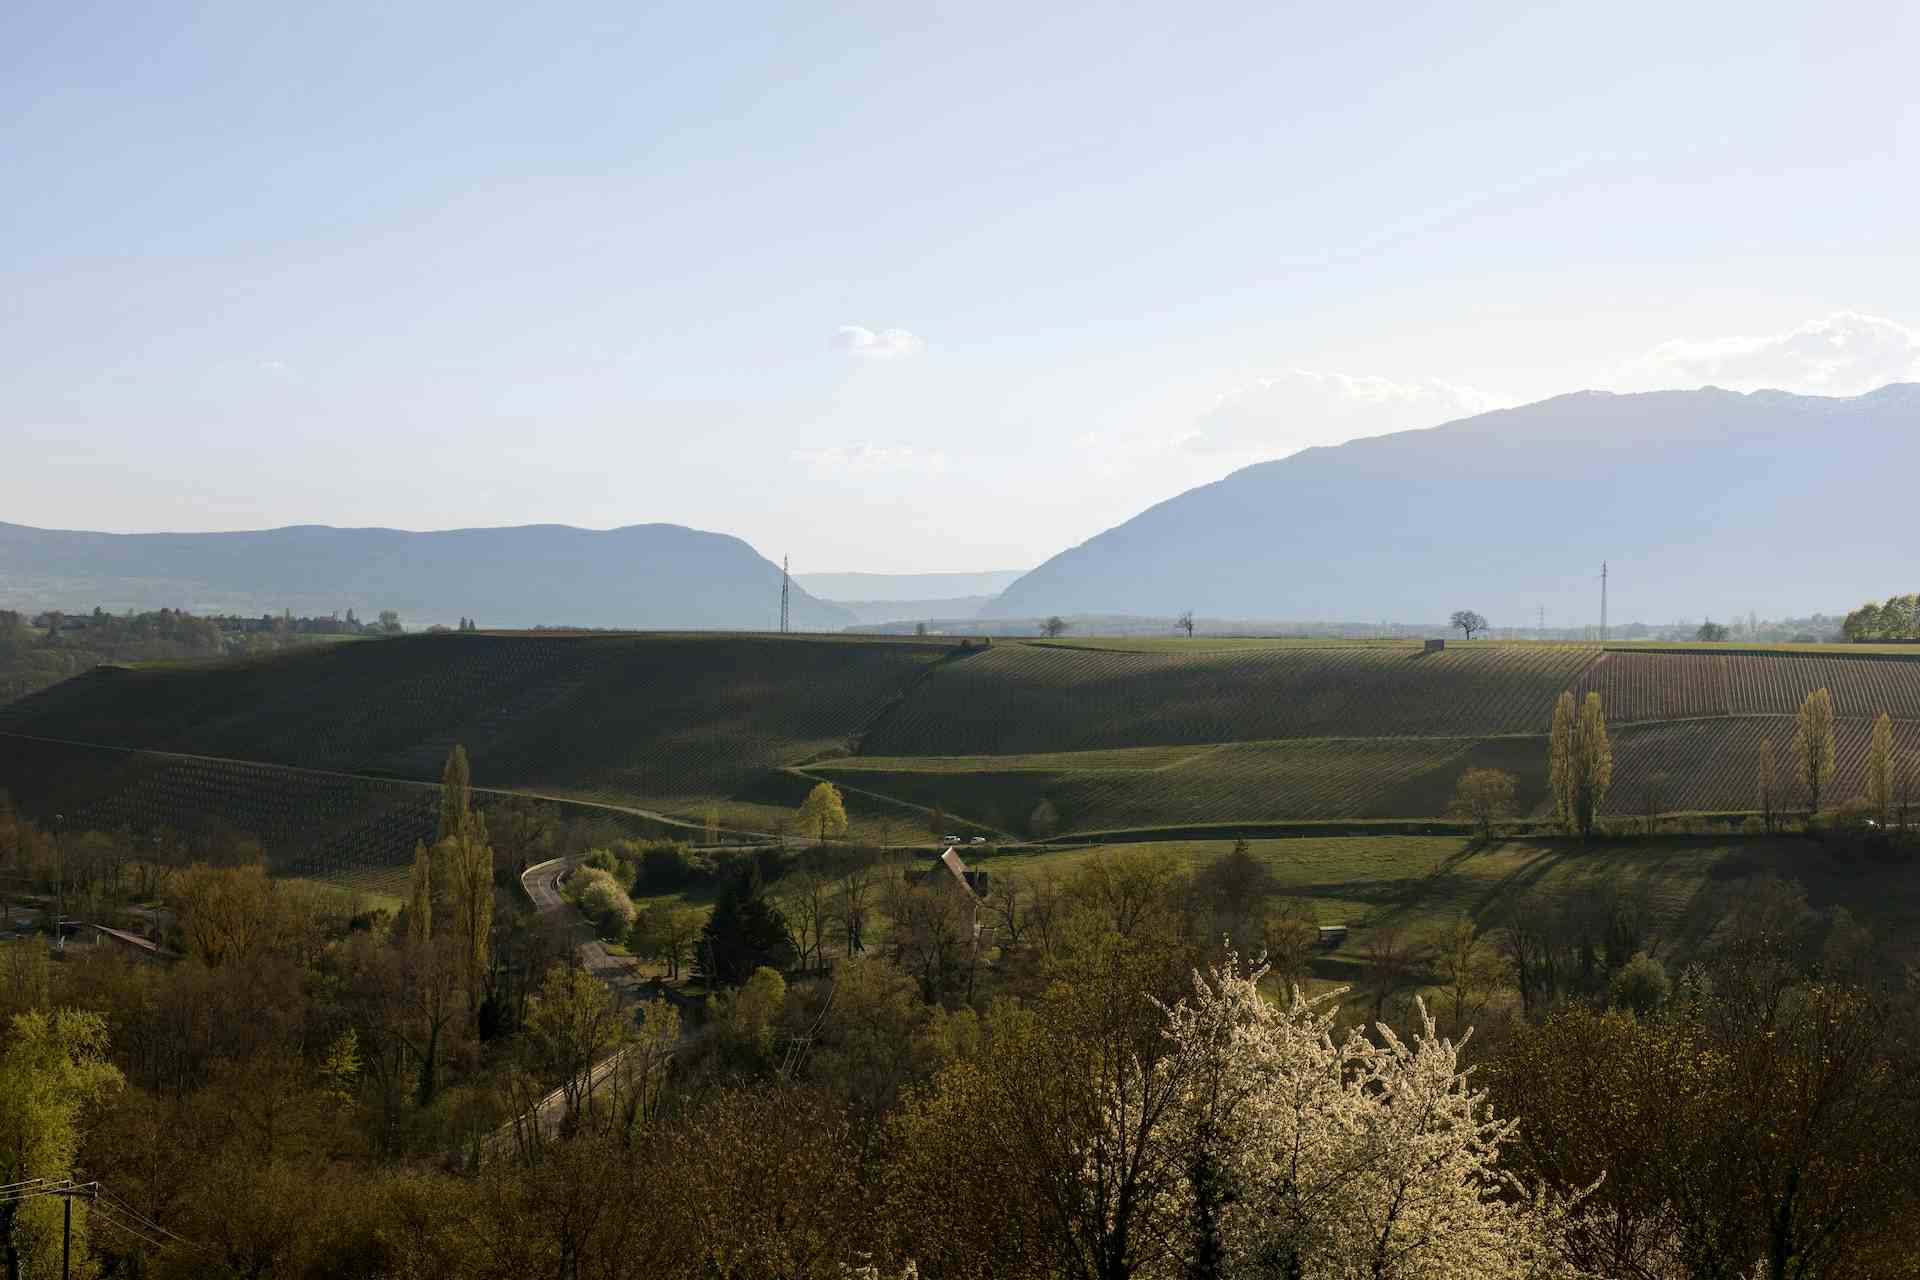 Cave et domaine les Perrières, producer in Peissy canton of Geneva in Switzerland